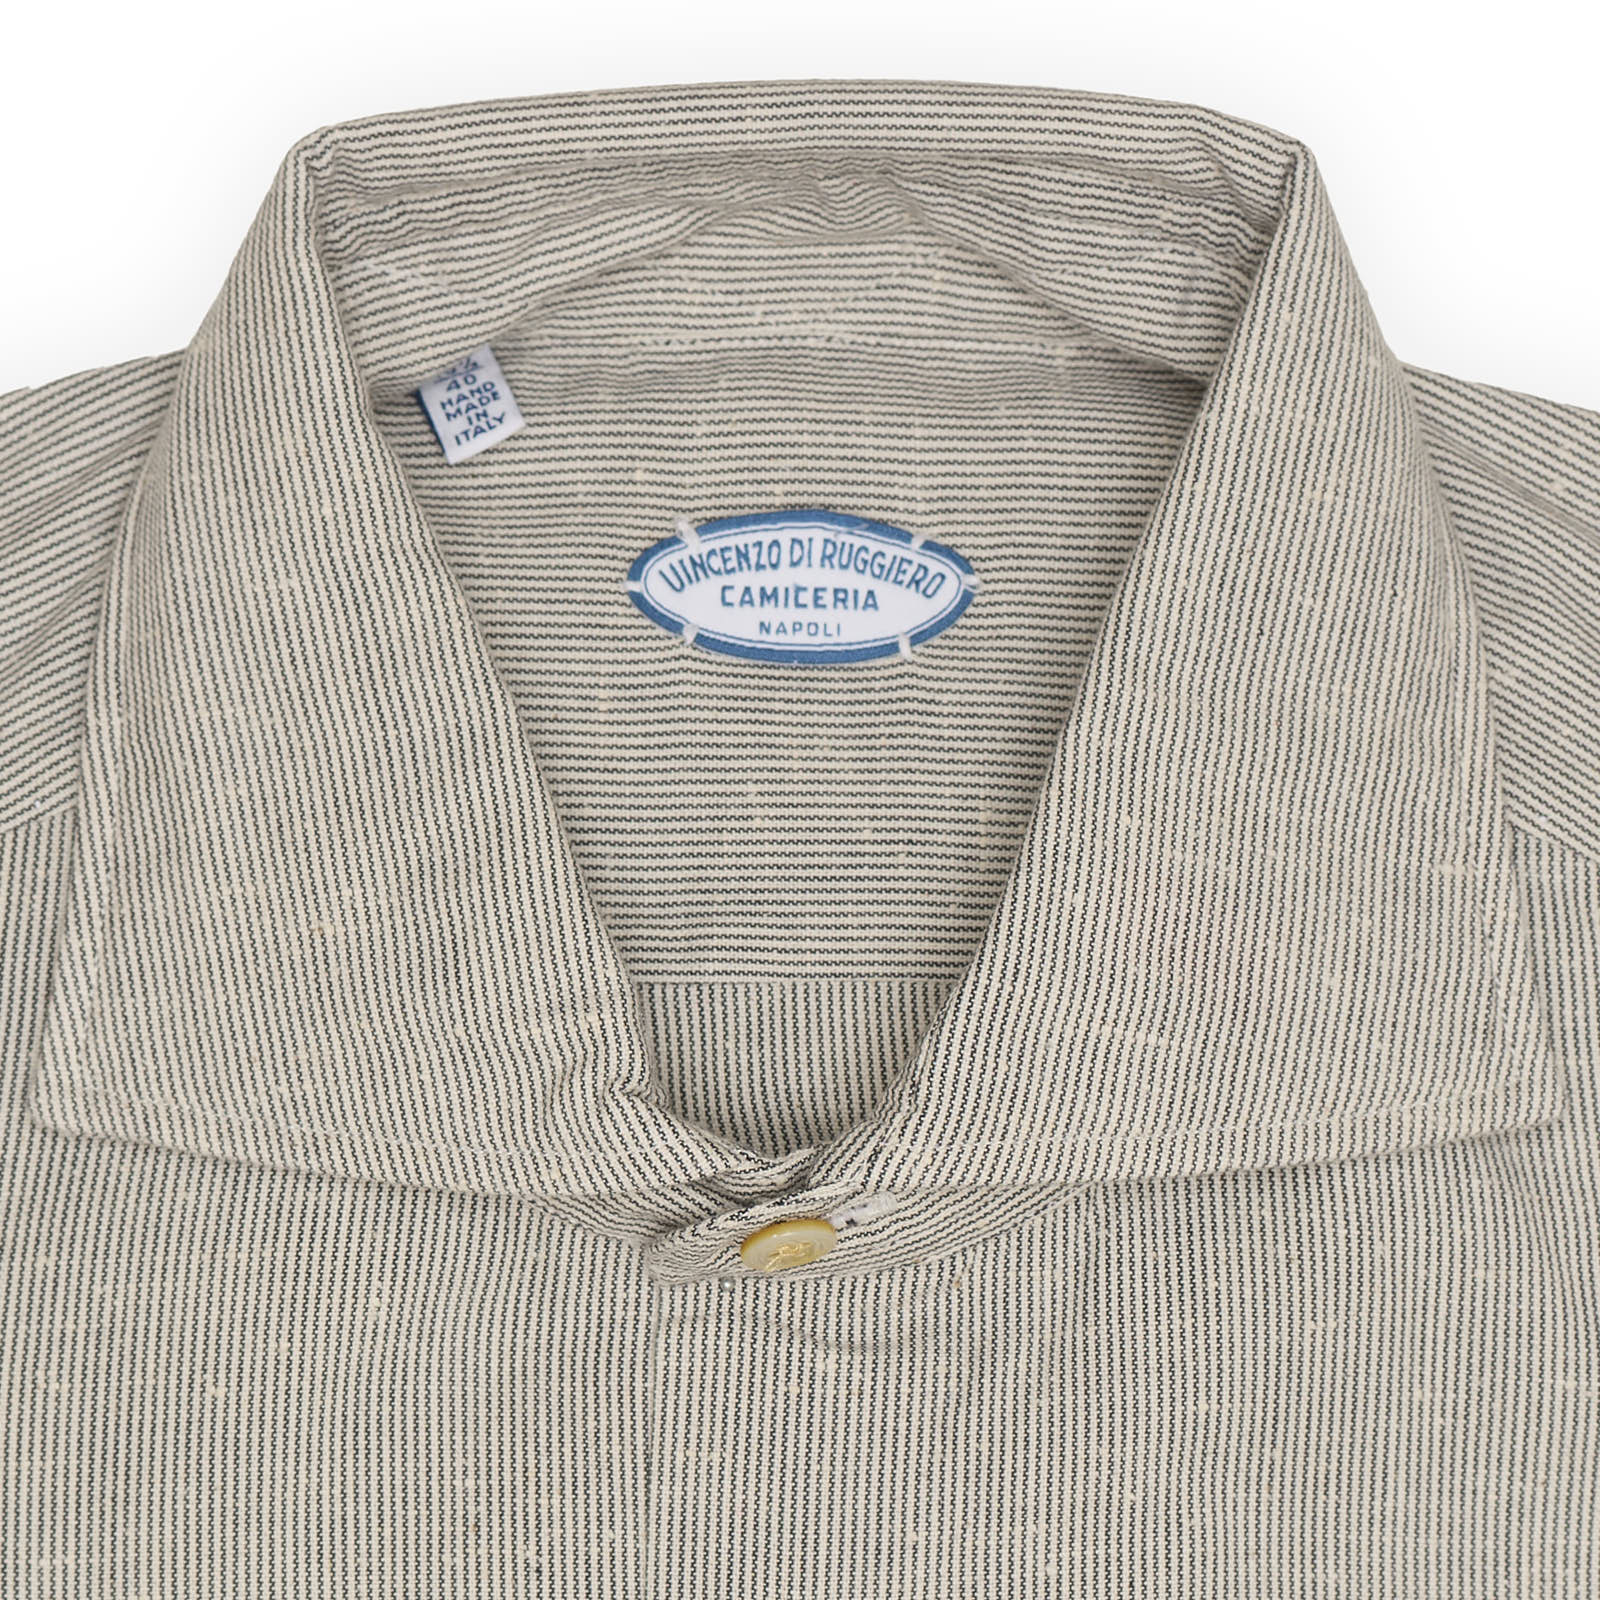 VINCENZO DI RUGGIERO Gray Striped Cotton Shirt EU 40 NEW US 15.75